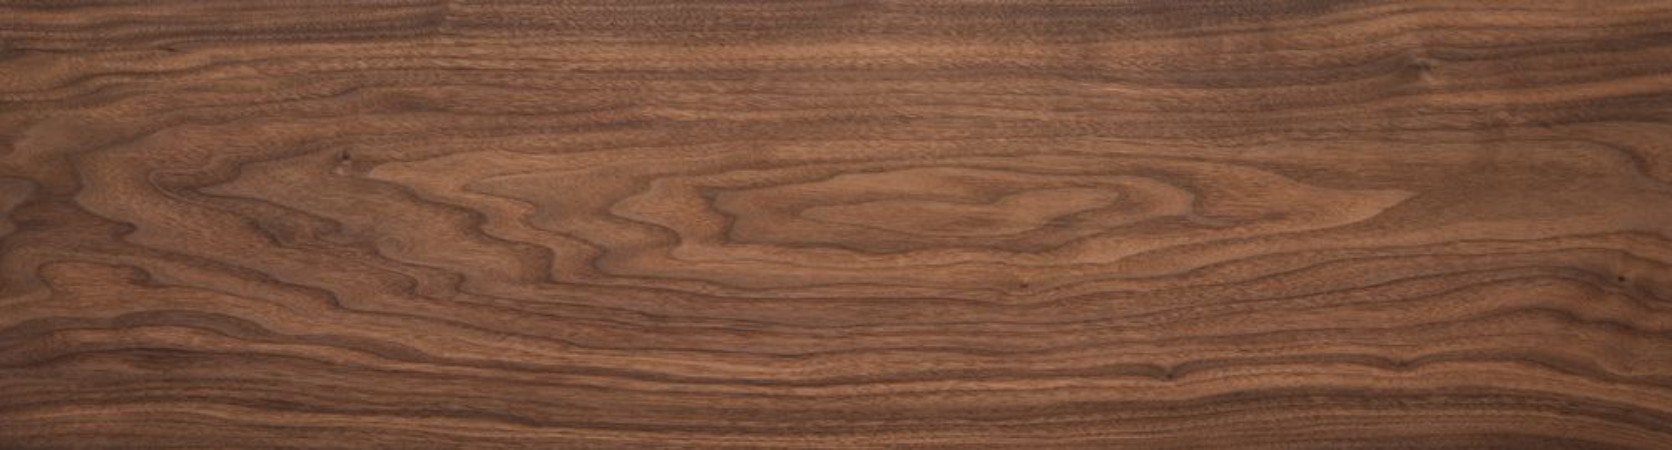 Image de Super long walnut planks texture backgroundWalnut wood texture